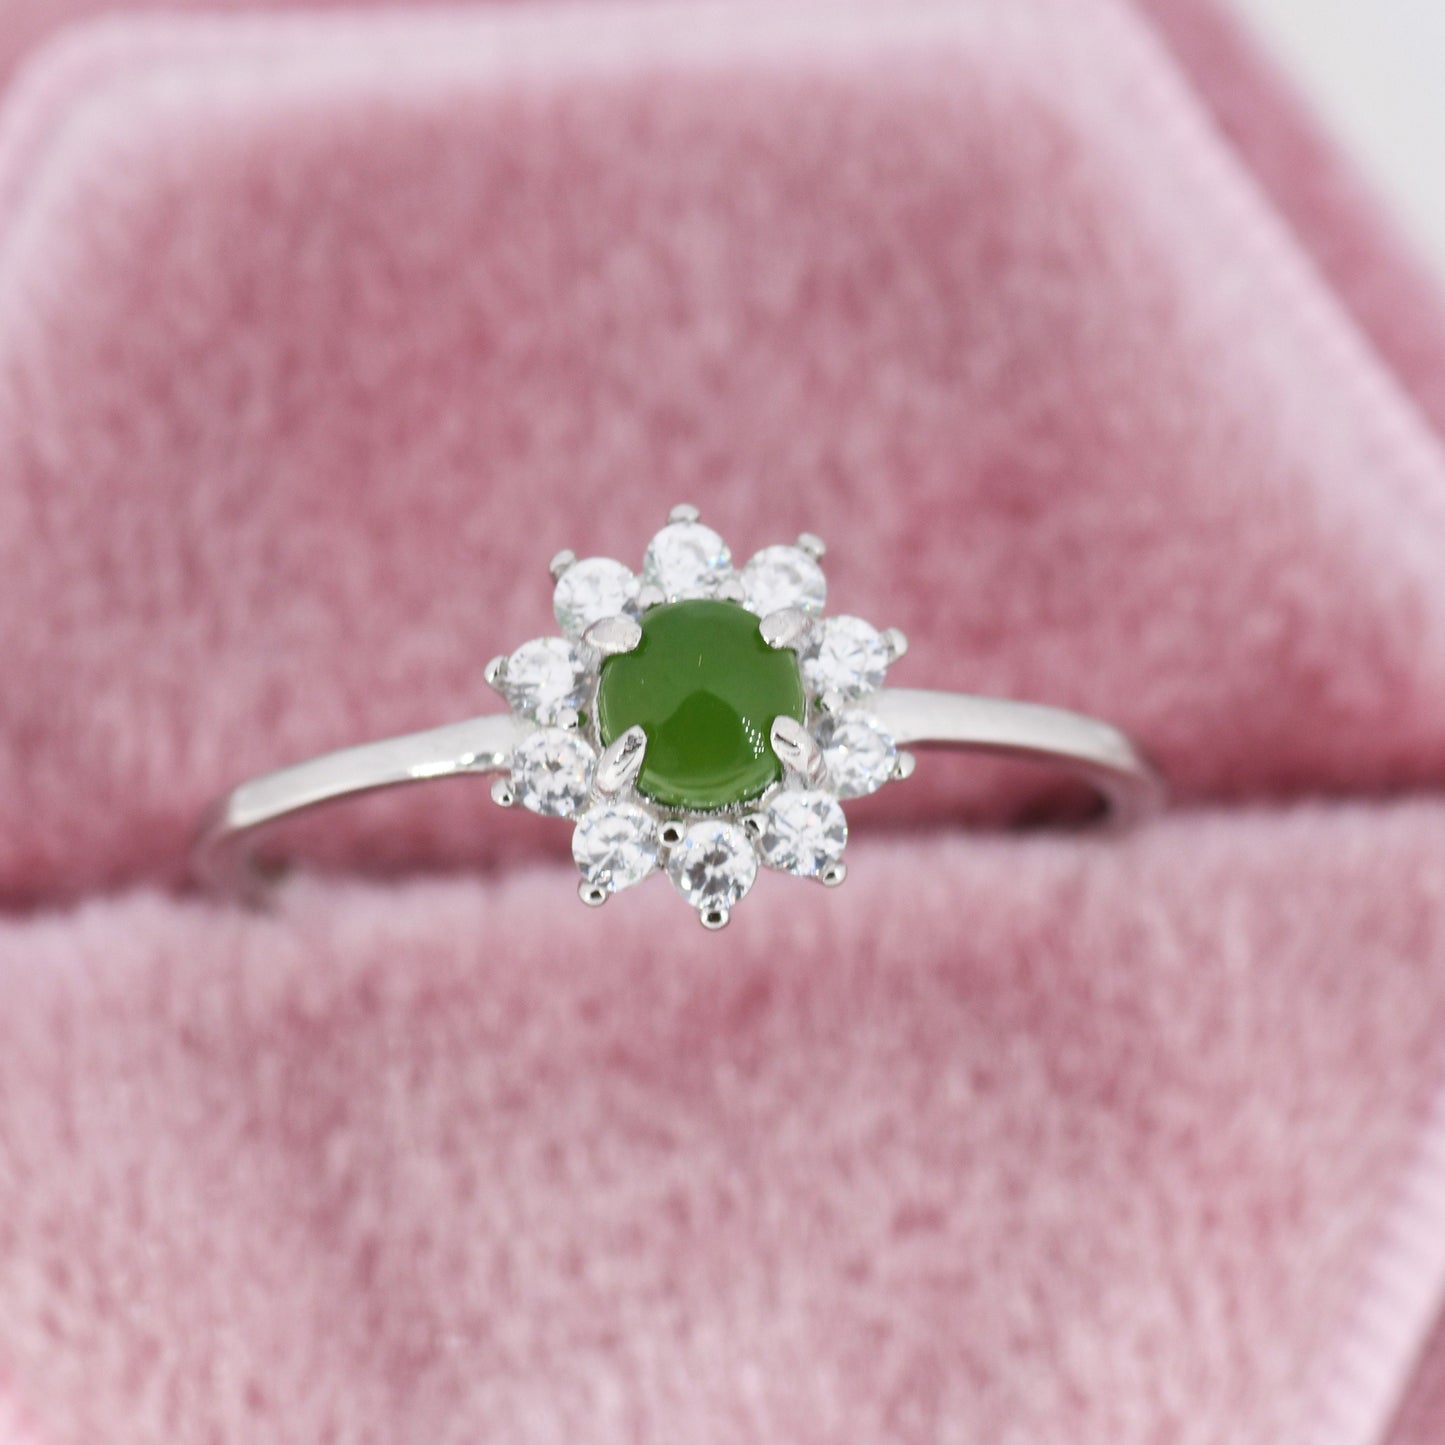 Genuine Jade Stone Halo Ring in Sterling Silver, US 5 - 8, Natural Jade Gemstone Ring,  Crystal Flower Ring